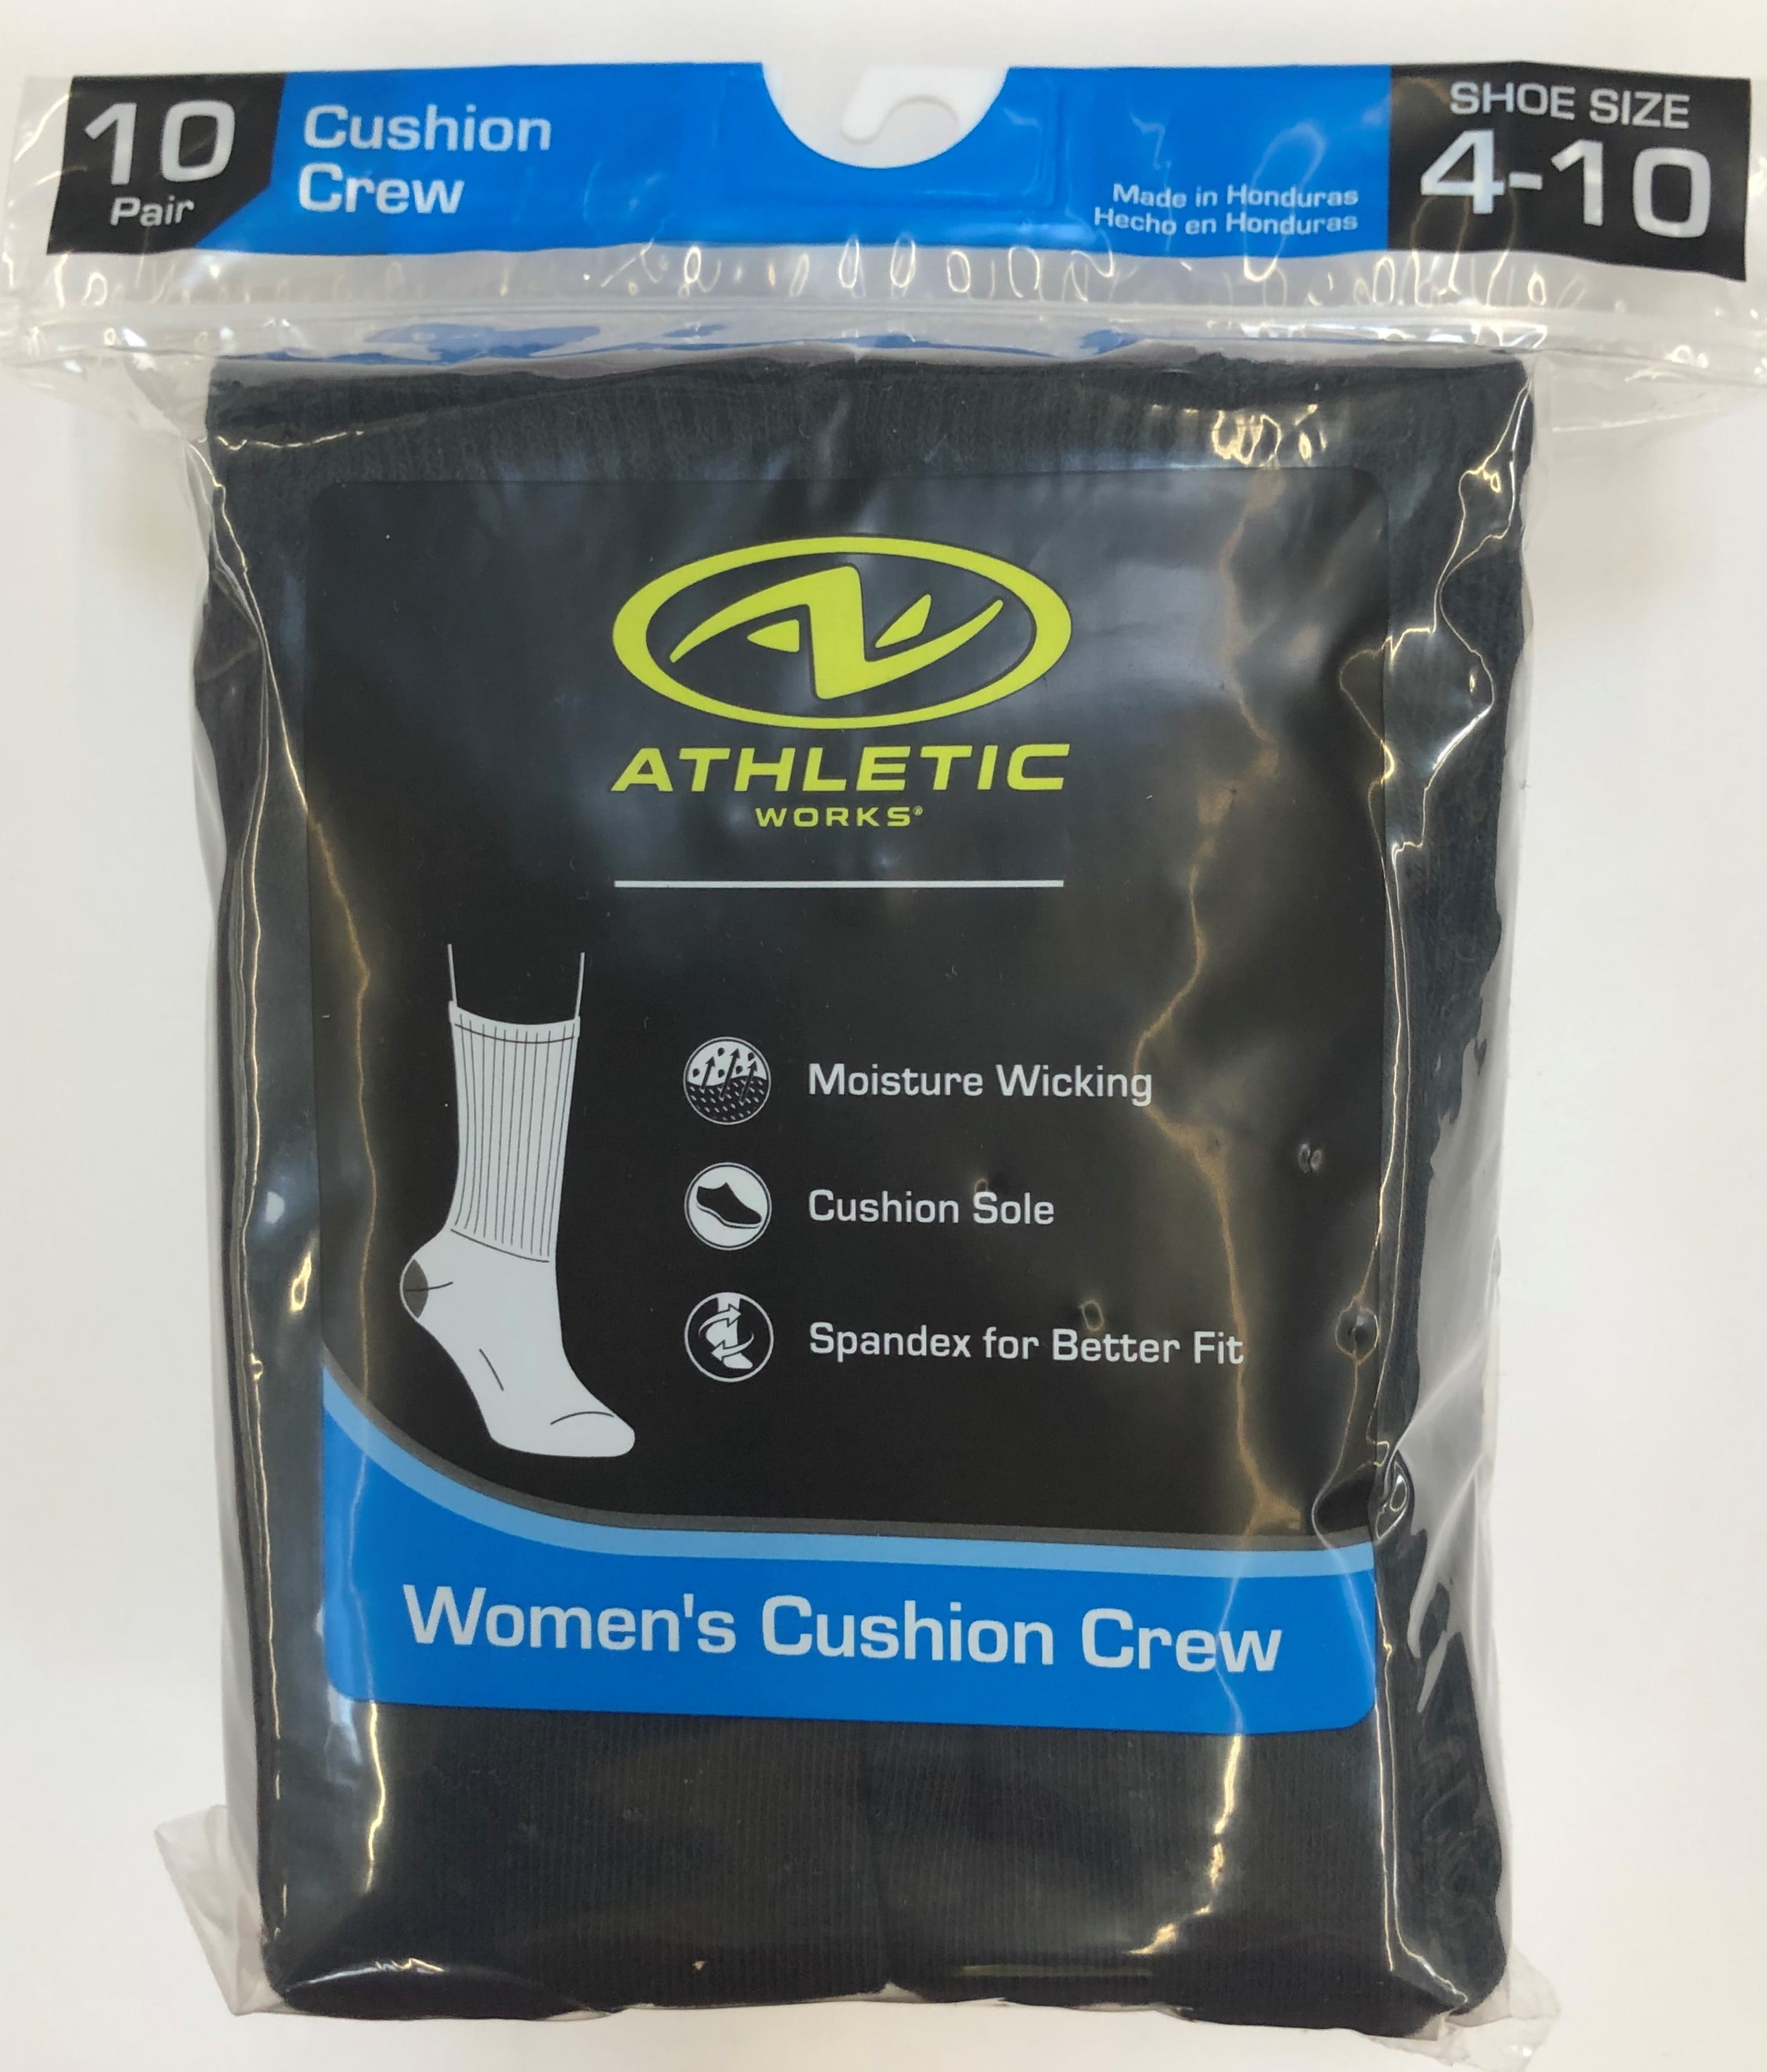 Athletic Works Women's Cushion Crew Socks, 10 Pack - Walmart.com